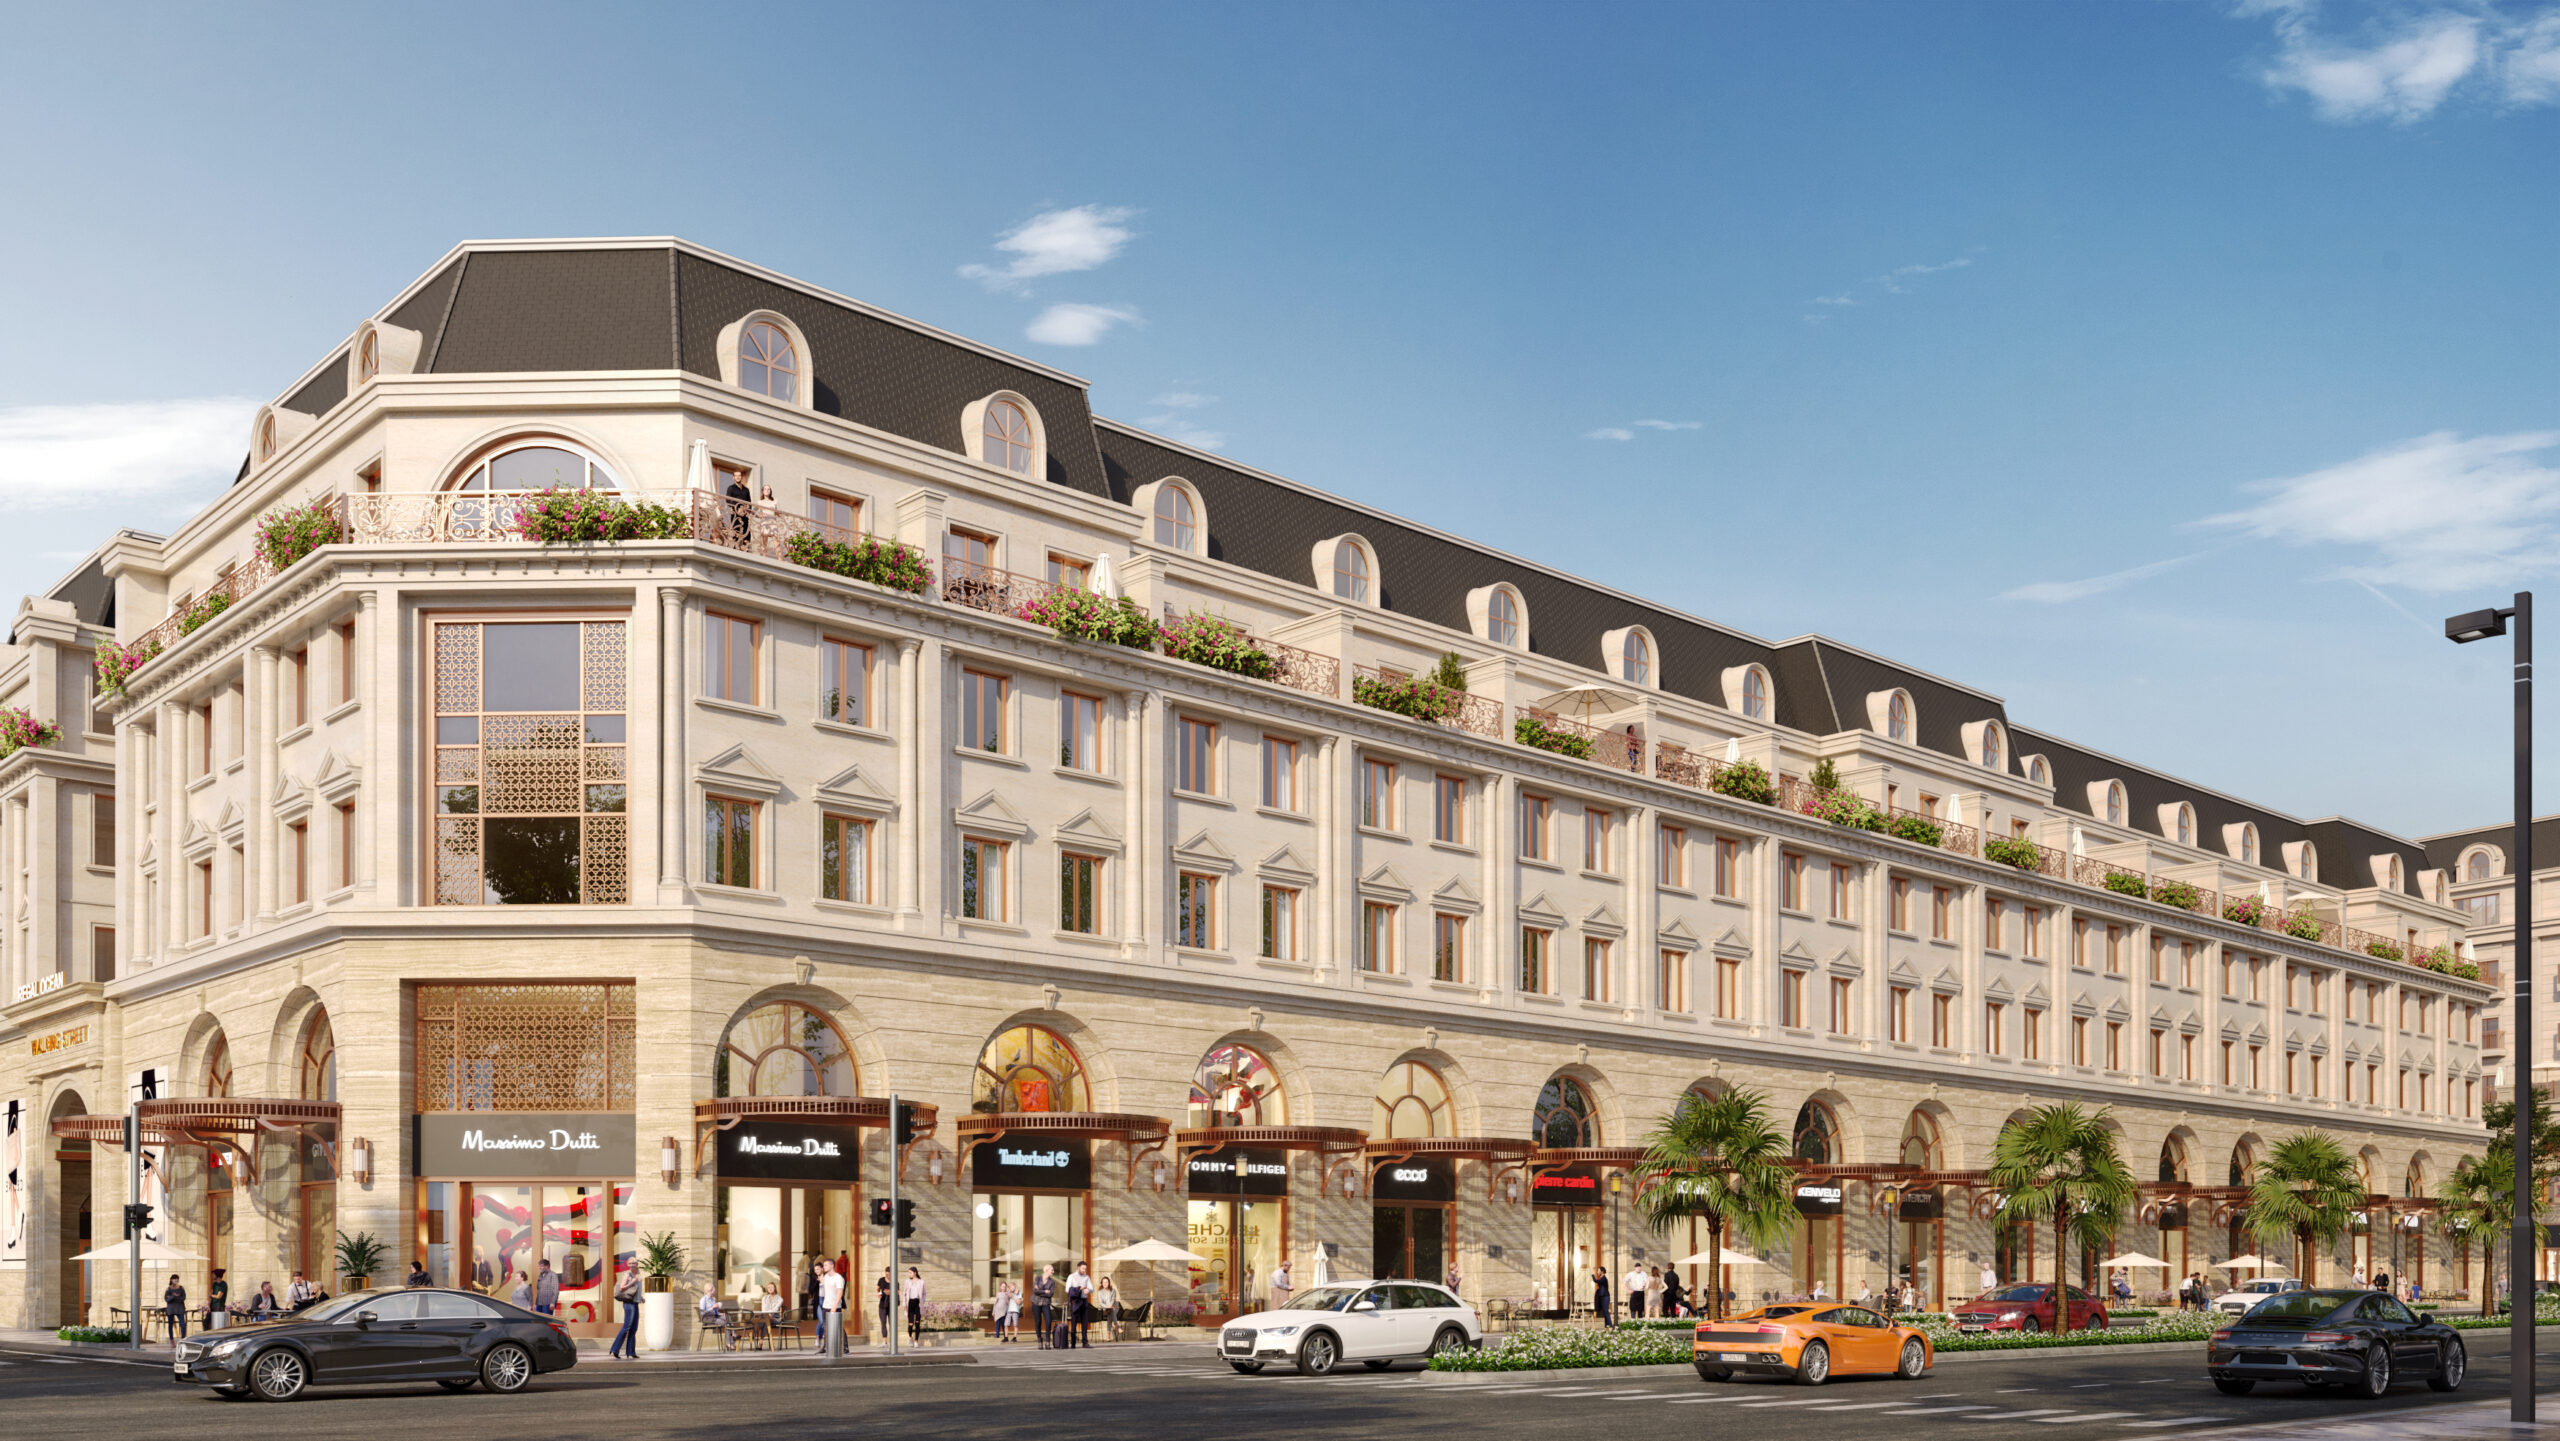 Regal Legend cất nóc Boutique Hotels, hợp tác Turner tư vấn xây dựng Novotel - Viet Nam Smart City